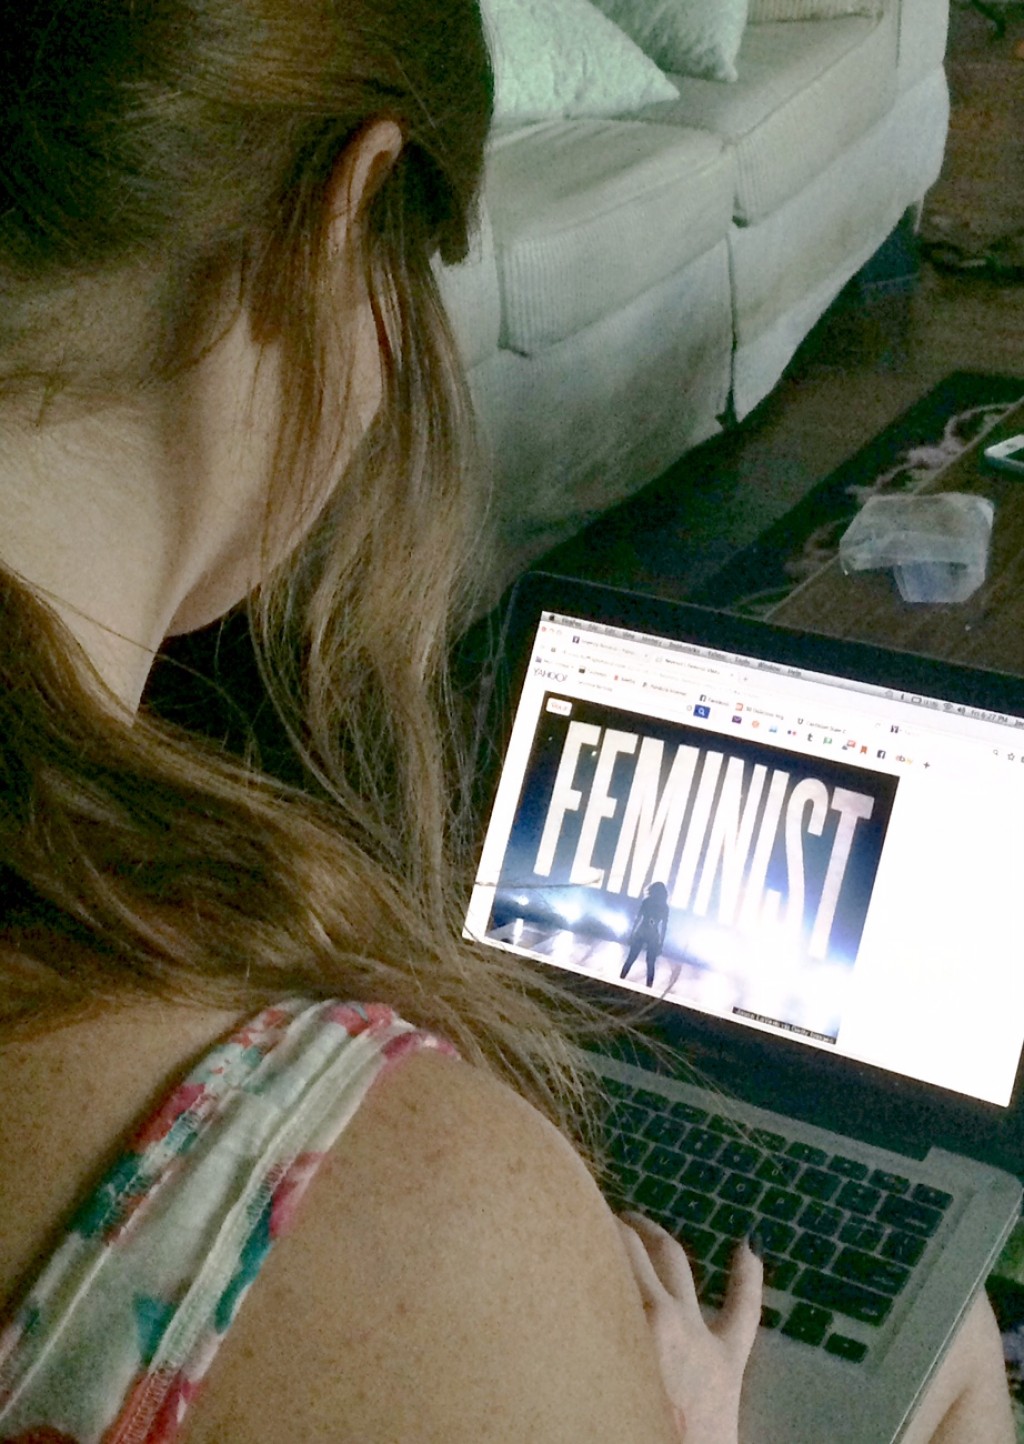 Beyonce makes feminism mainstream